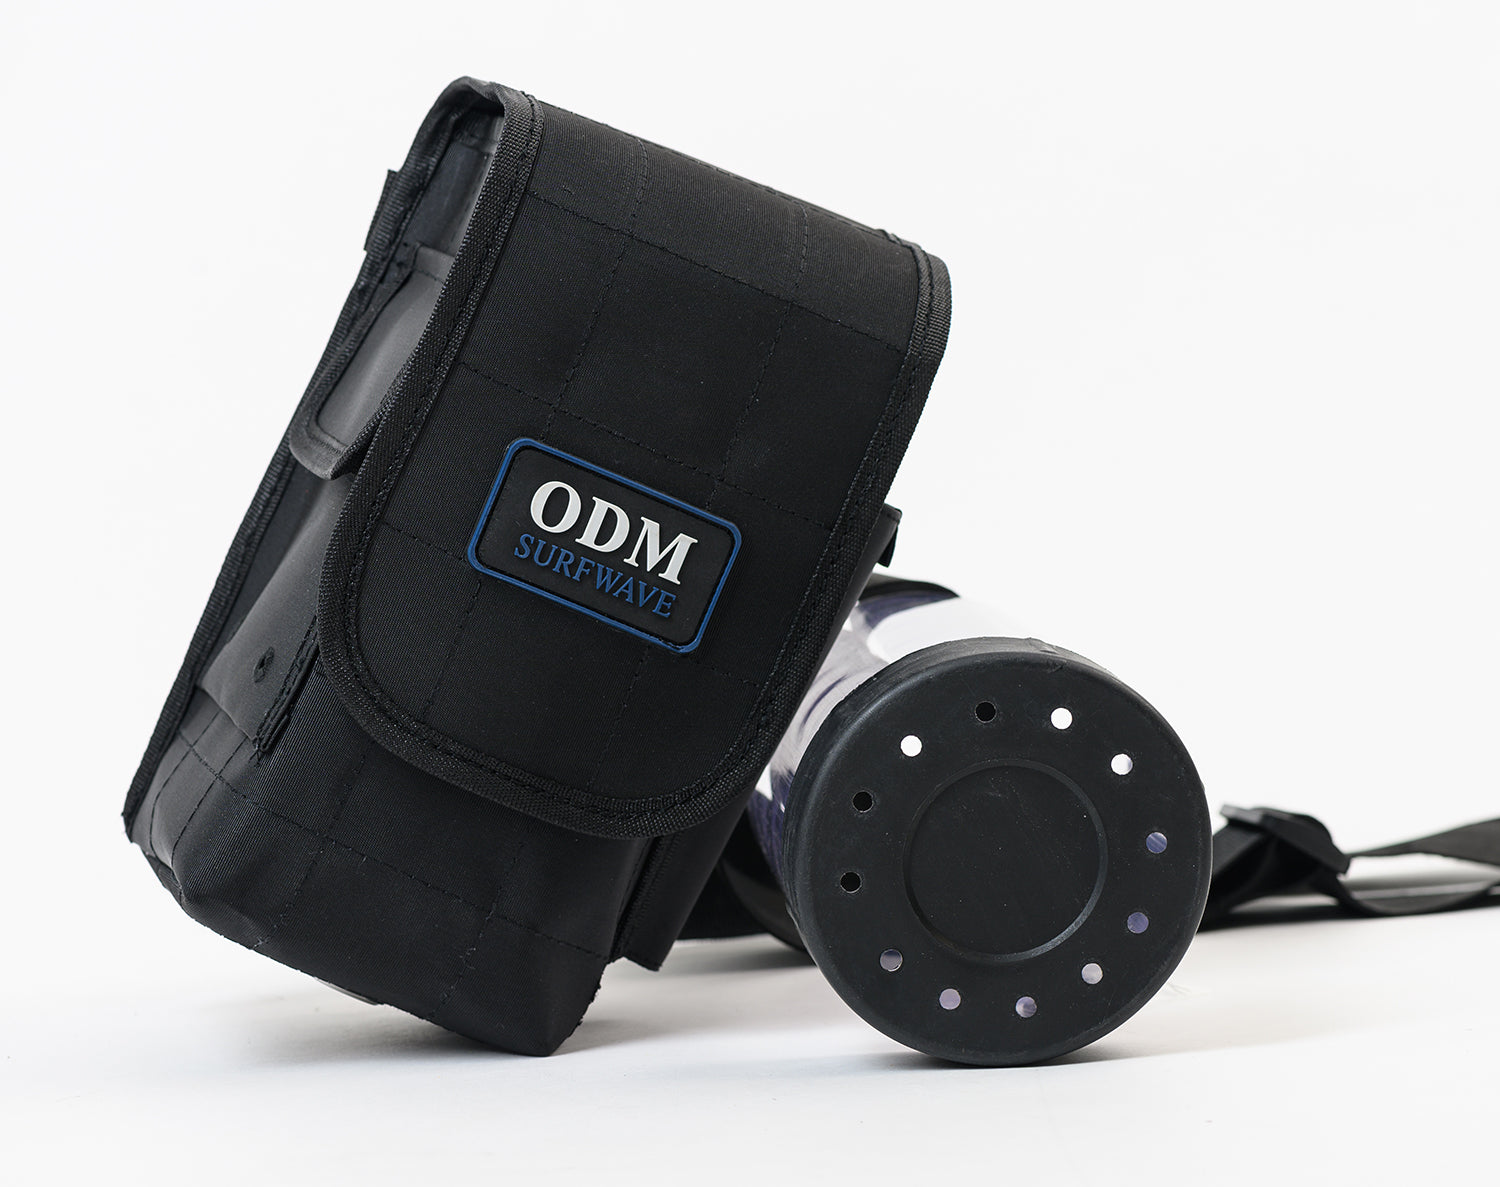 ODM Surfwave Plug Bag